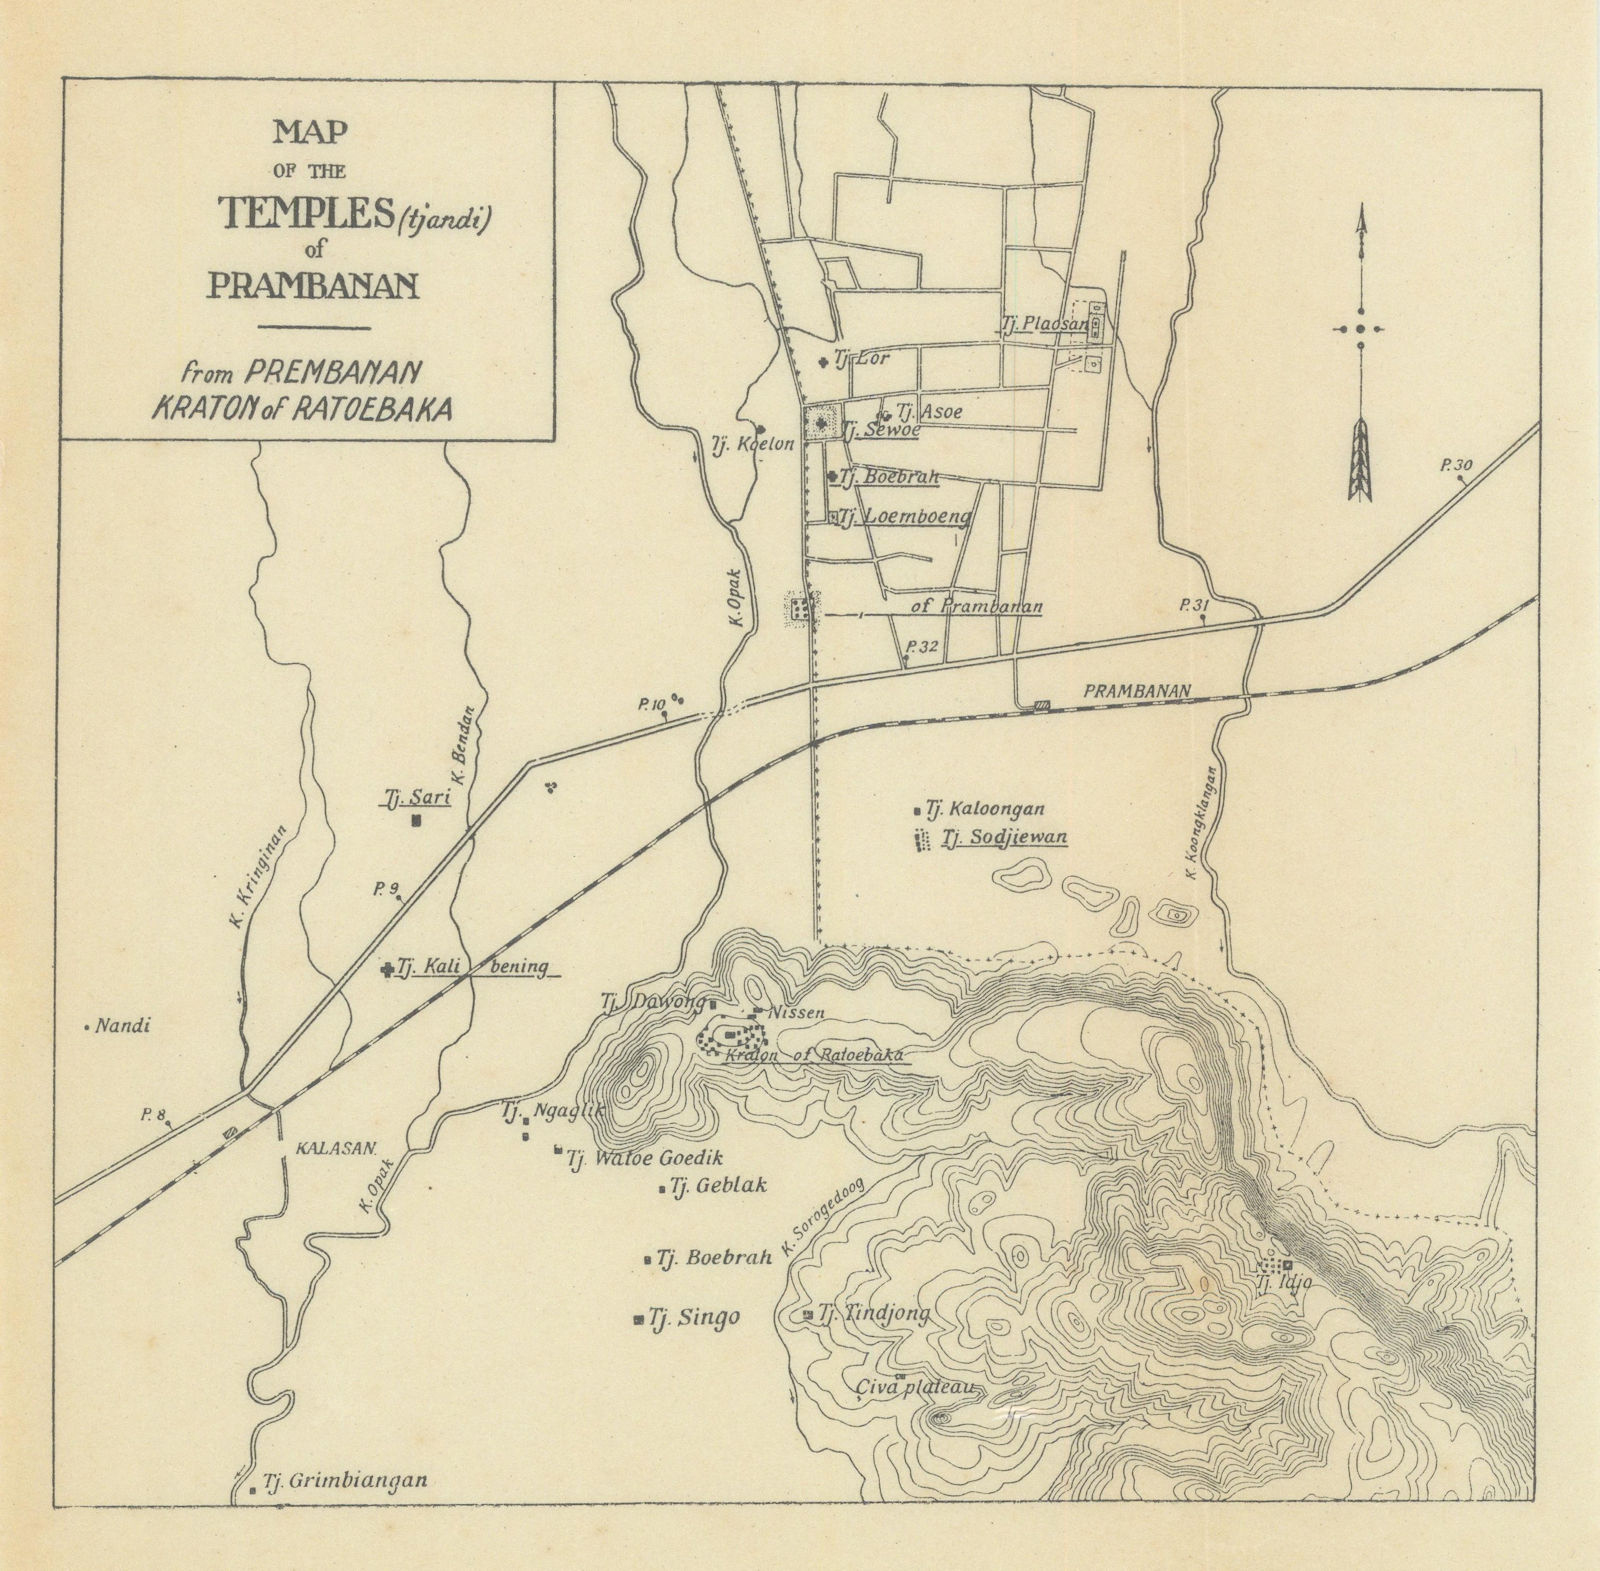 Map of the Temples (tjandi) of Prambanan, Java, Indonesia. VAN STOCKUM 1930